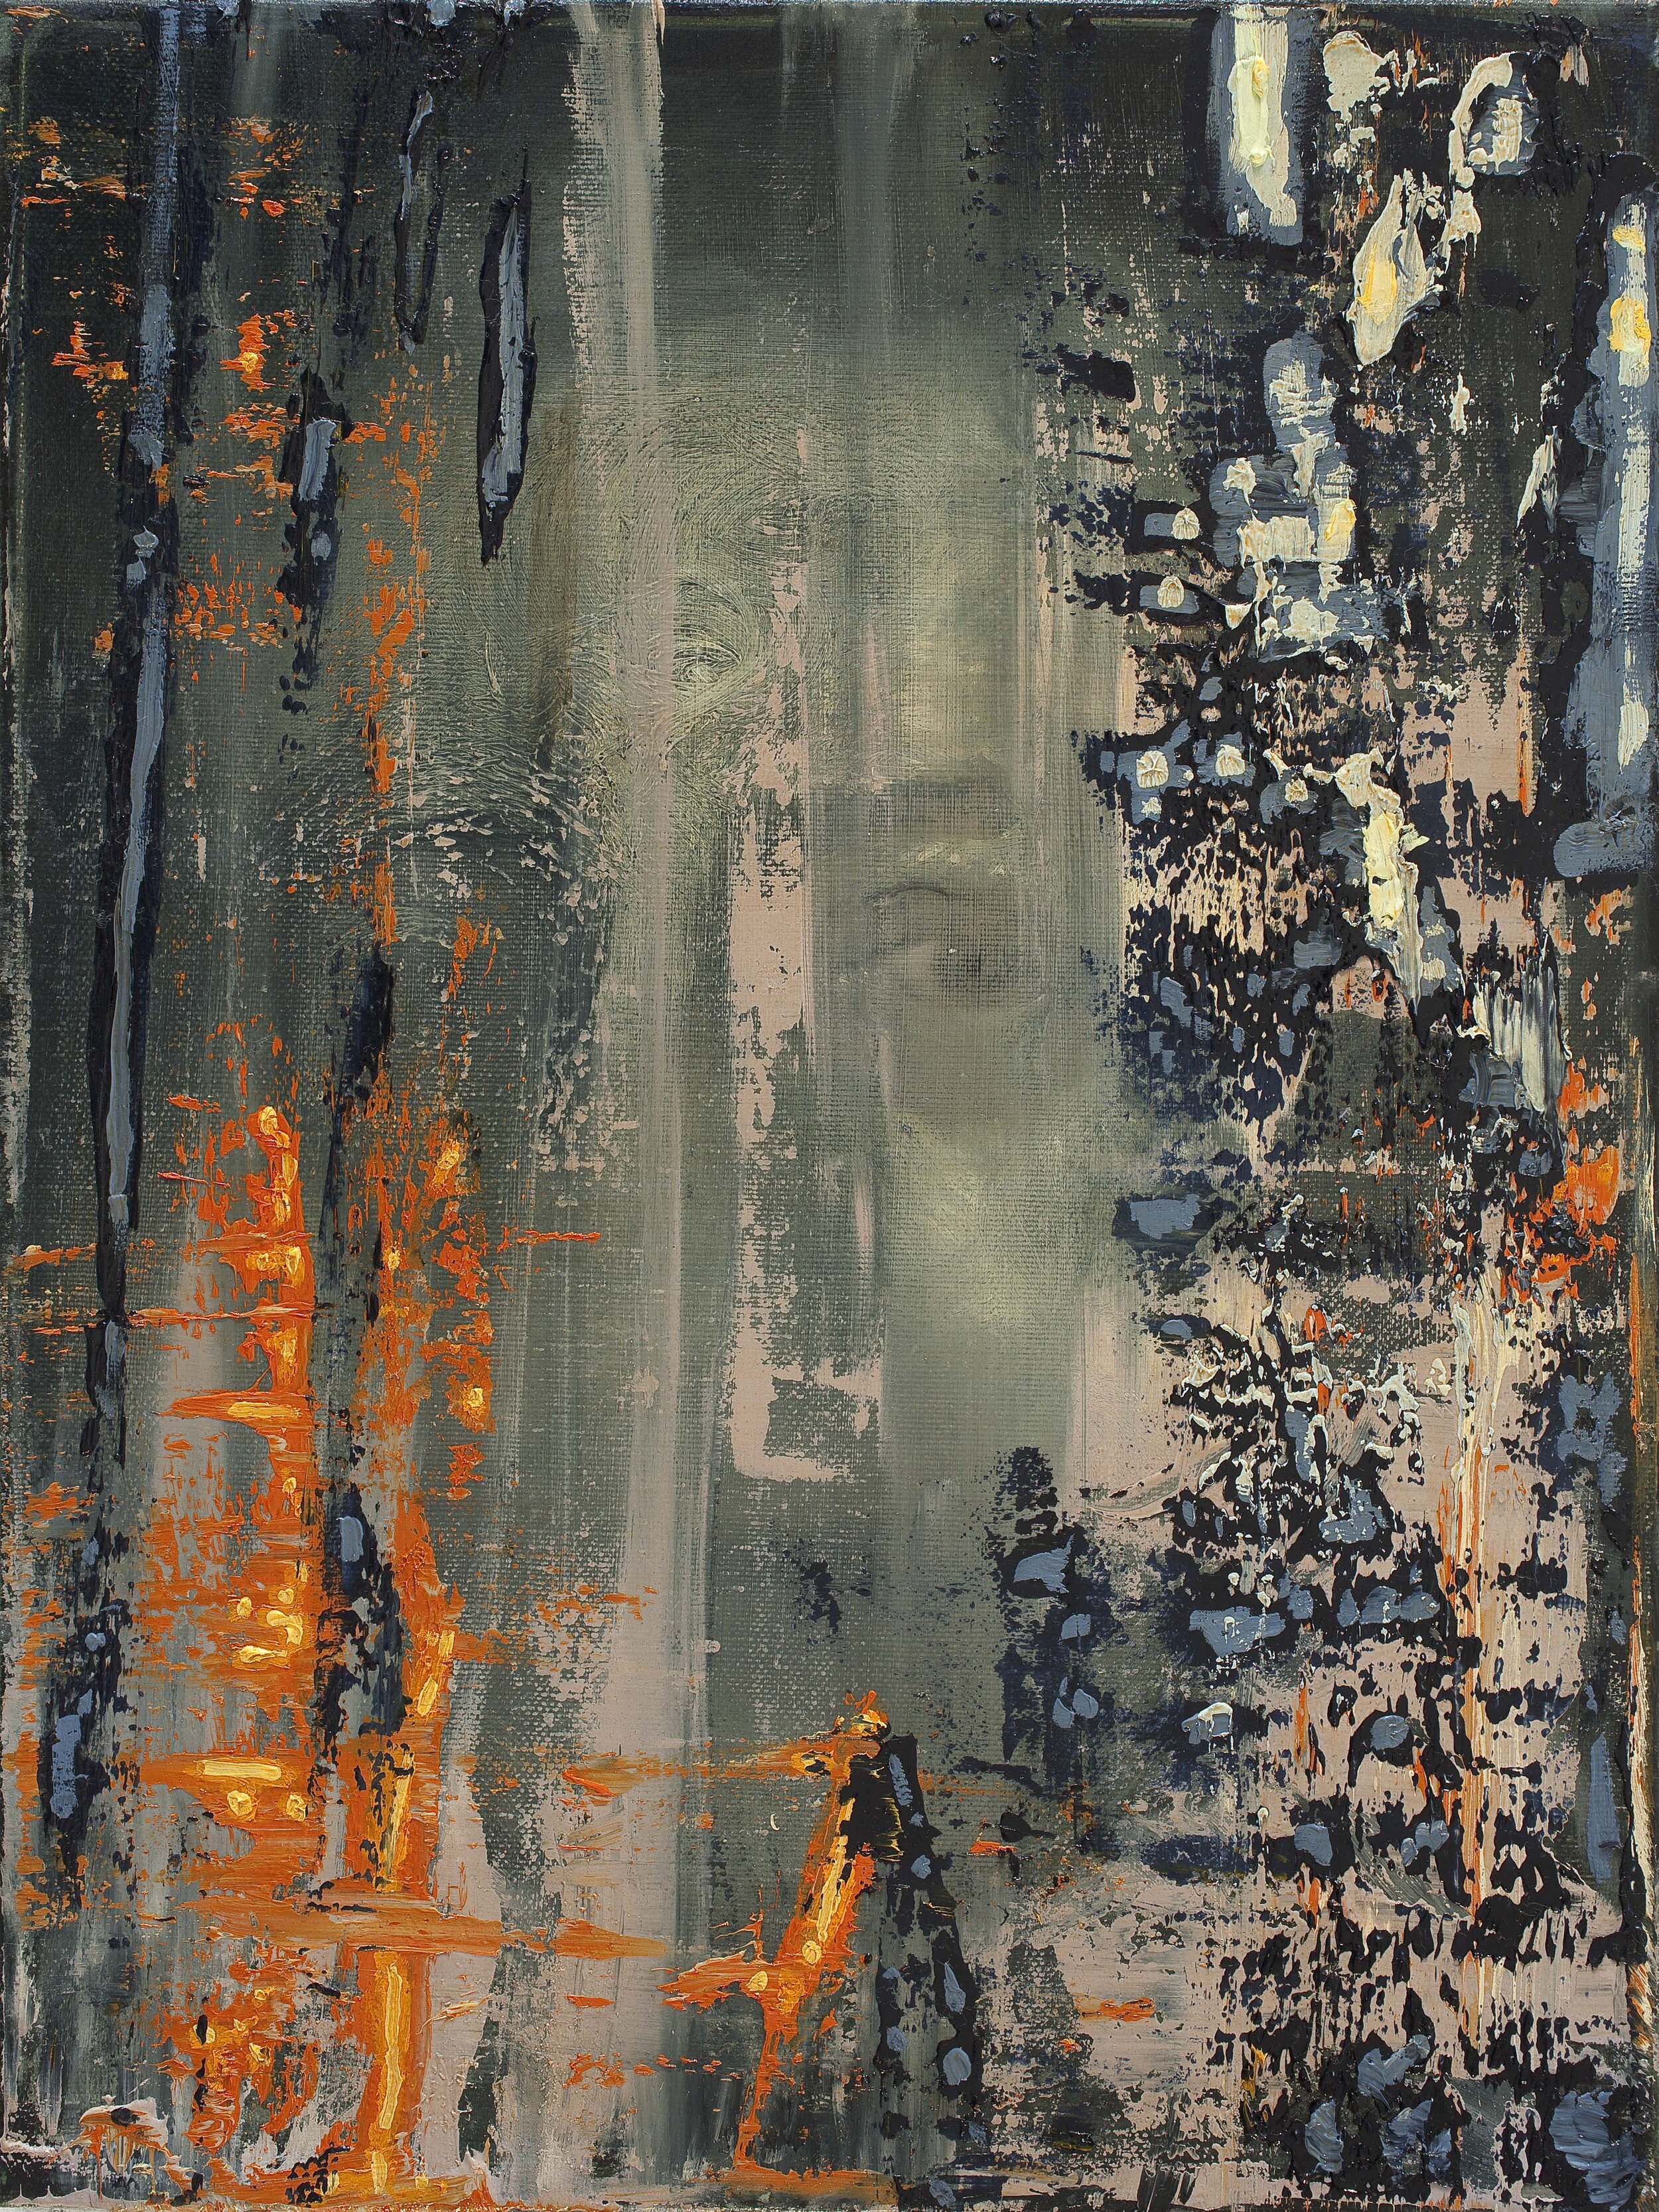 Listener (2011), oil on canvas, 40x30 cm